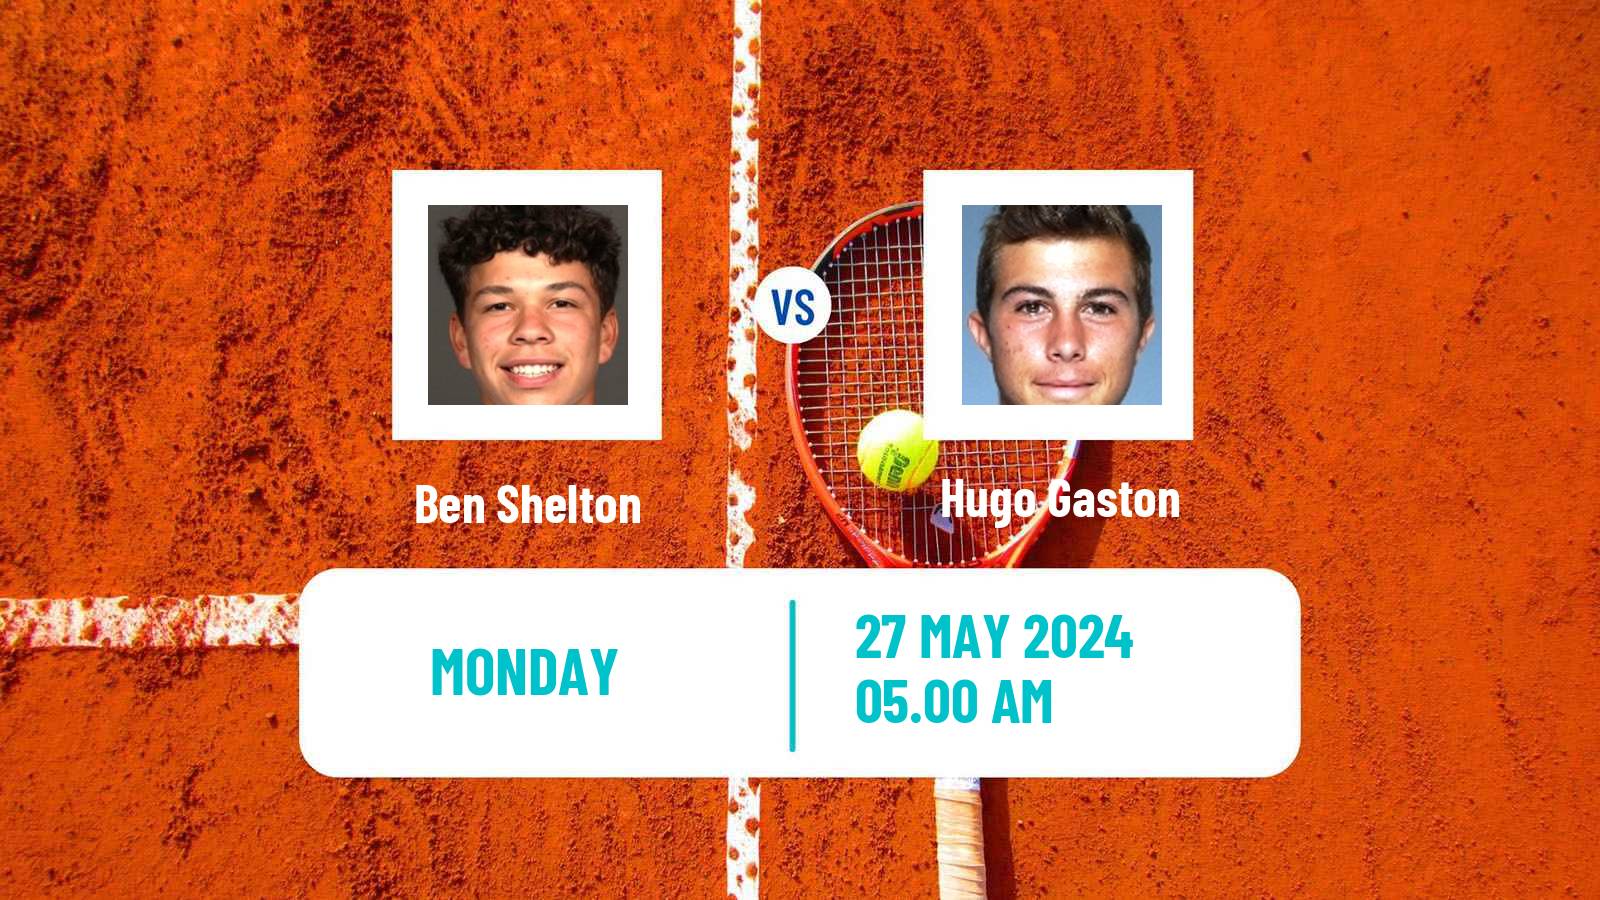 Tennis ATP Roland Garros Ben Shelton - Hugo Gaston